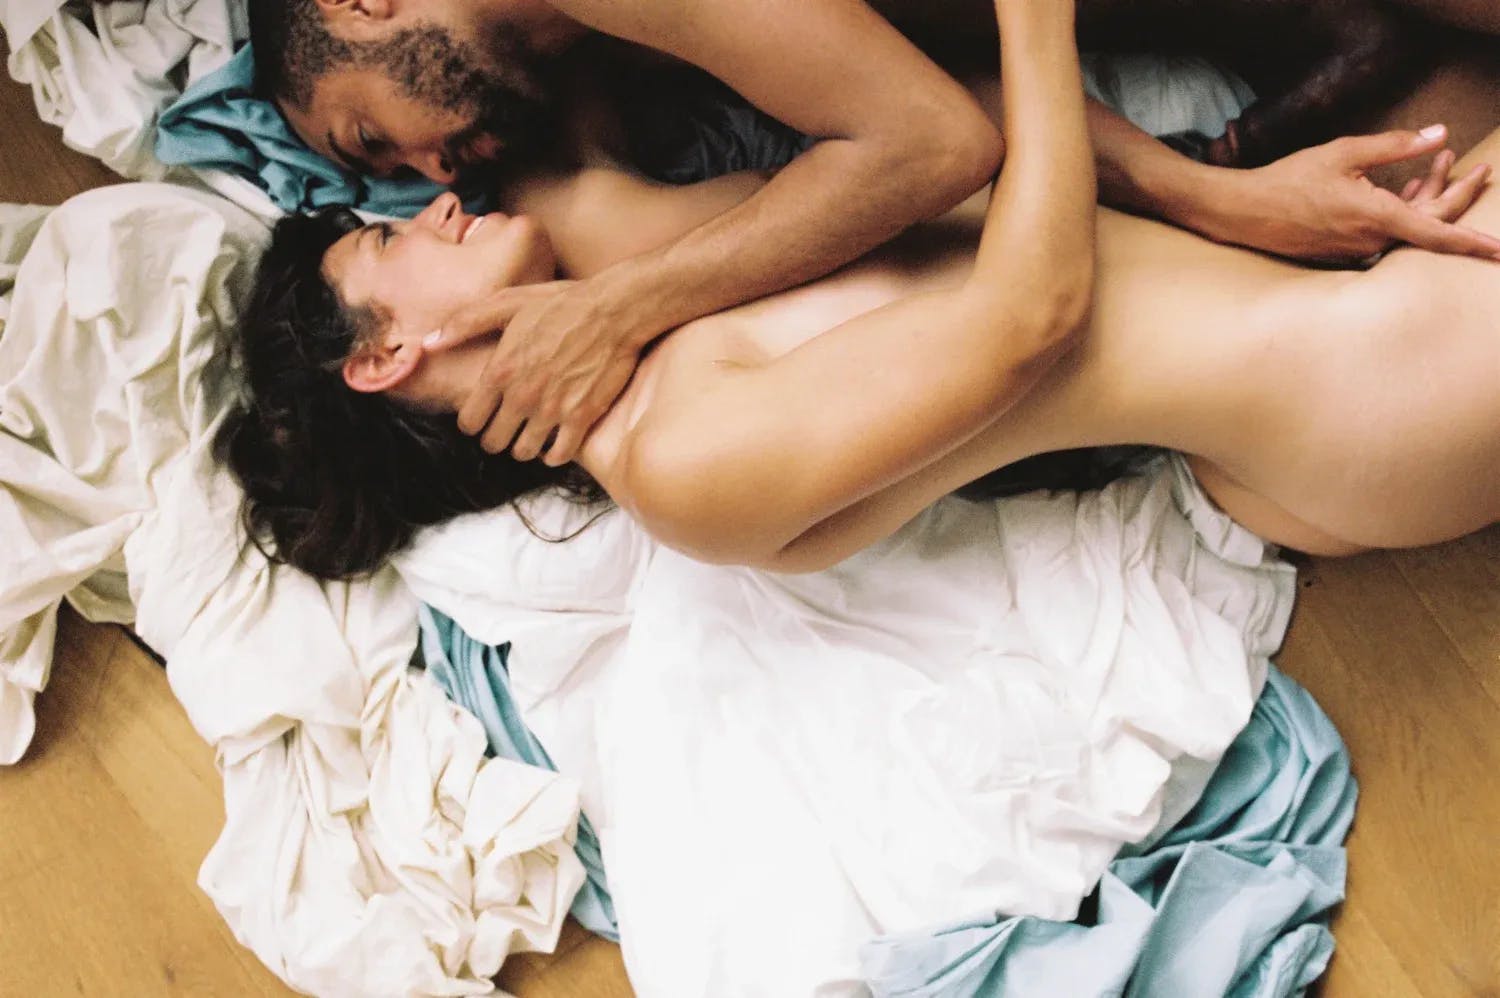 Film still from 'La Reine des Culottes' erotic film on XConfessions by Erika Lust 